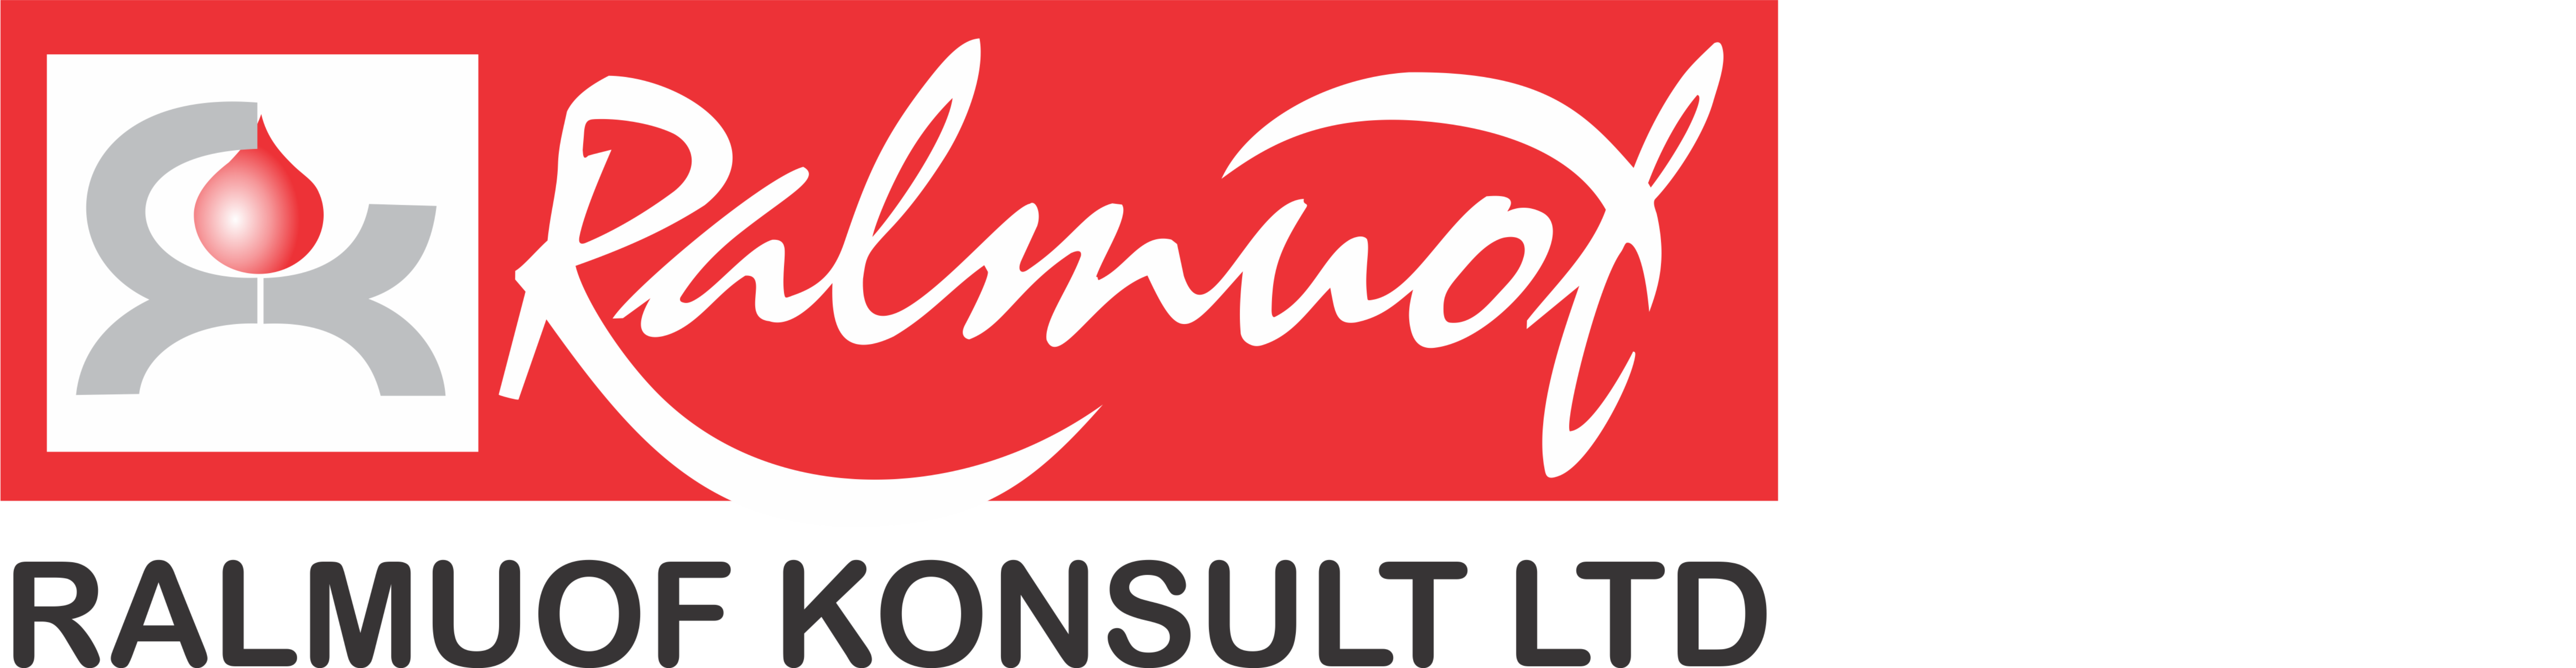 Ralmuof Konsult Limited